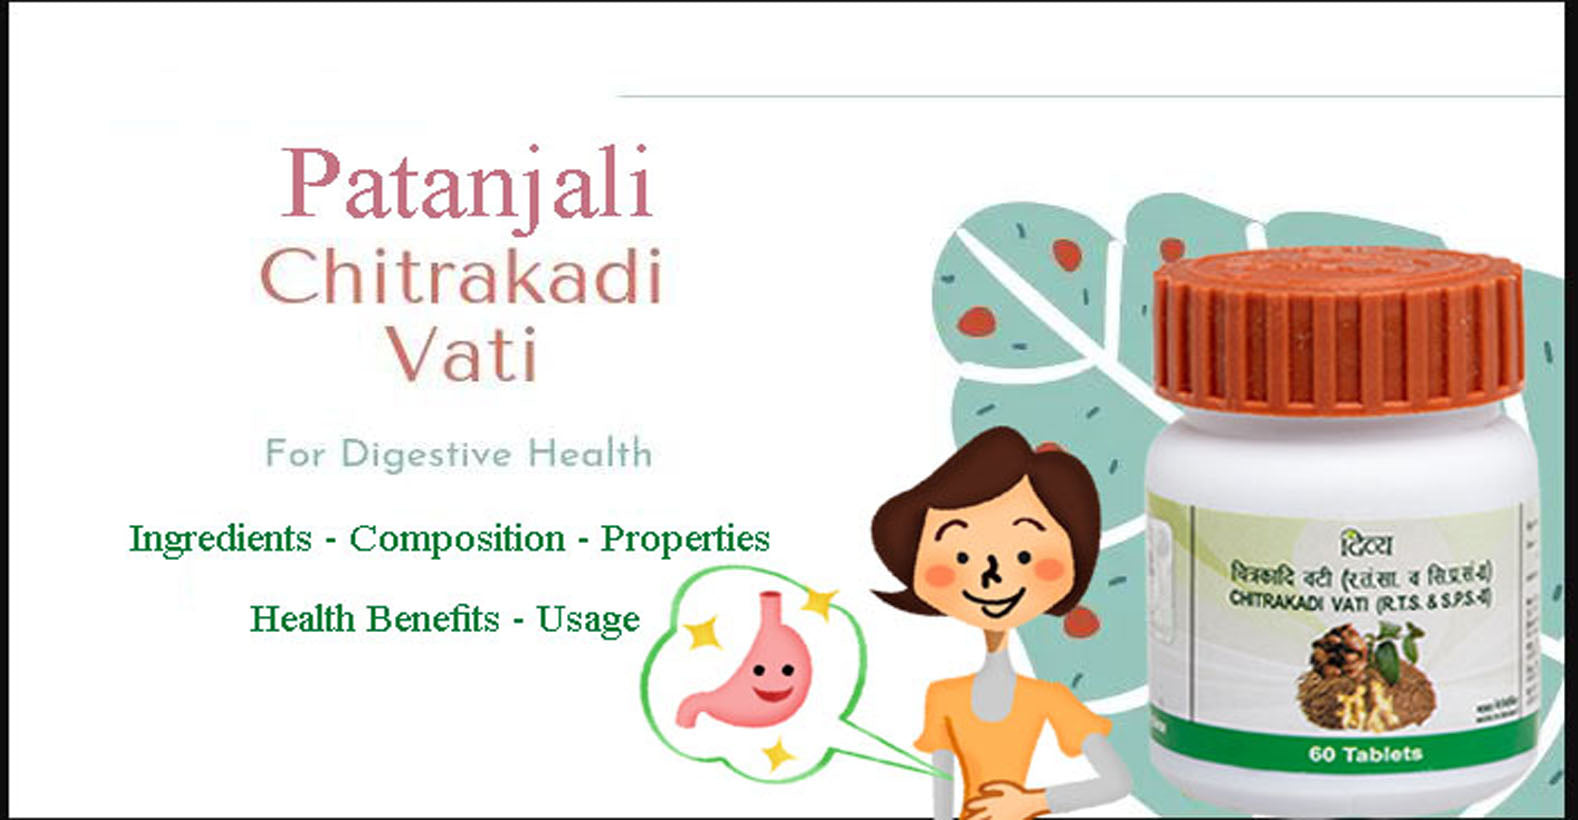 Patanjali Chitrakadi Vati - Ingredients, Composition, Properties, Health Benefits, Usage